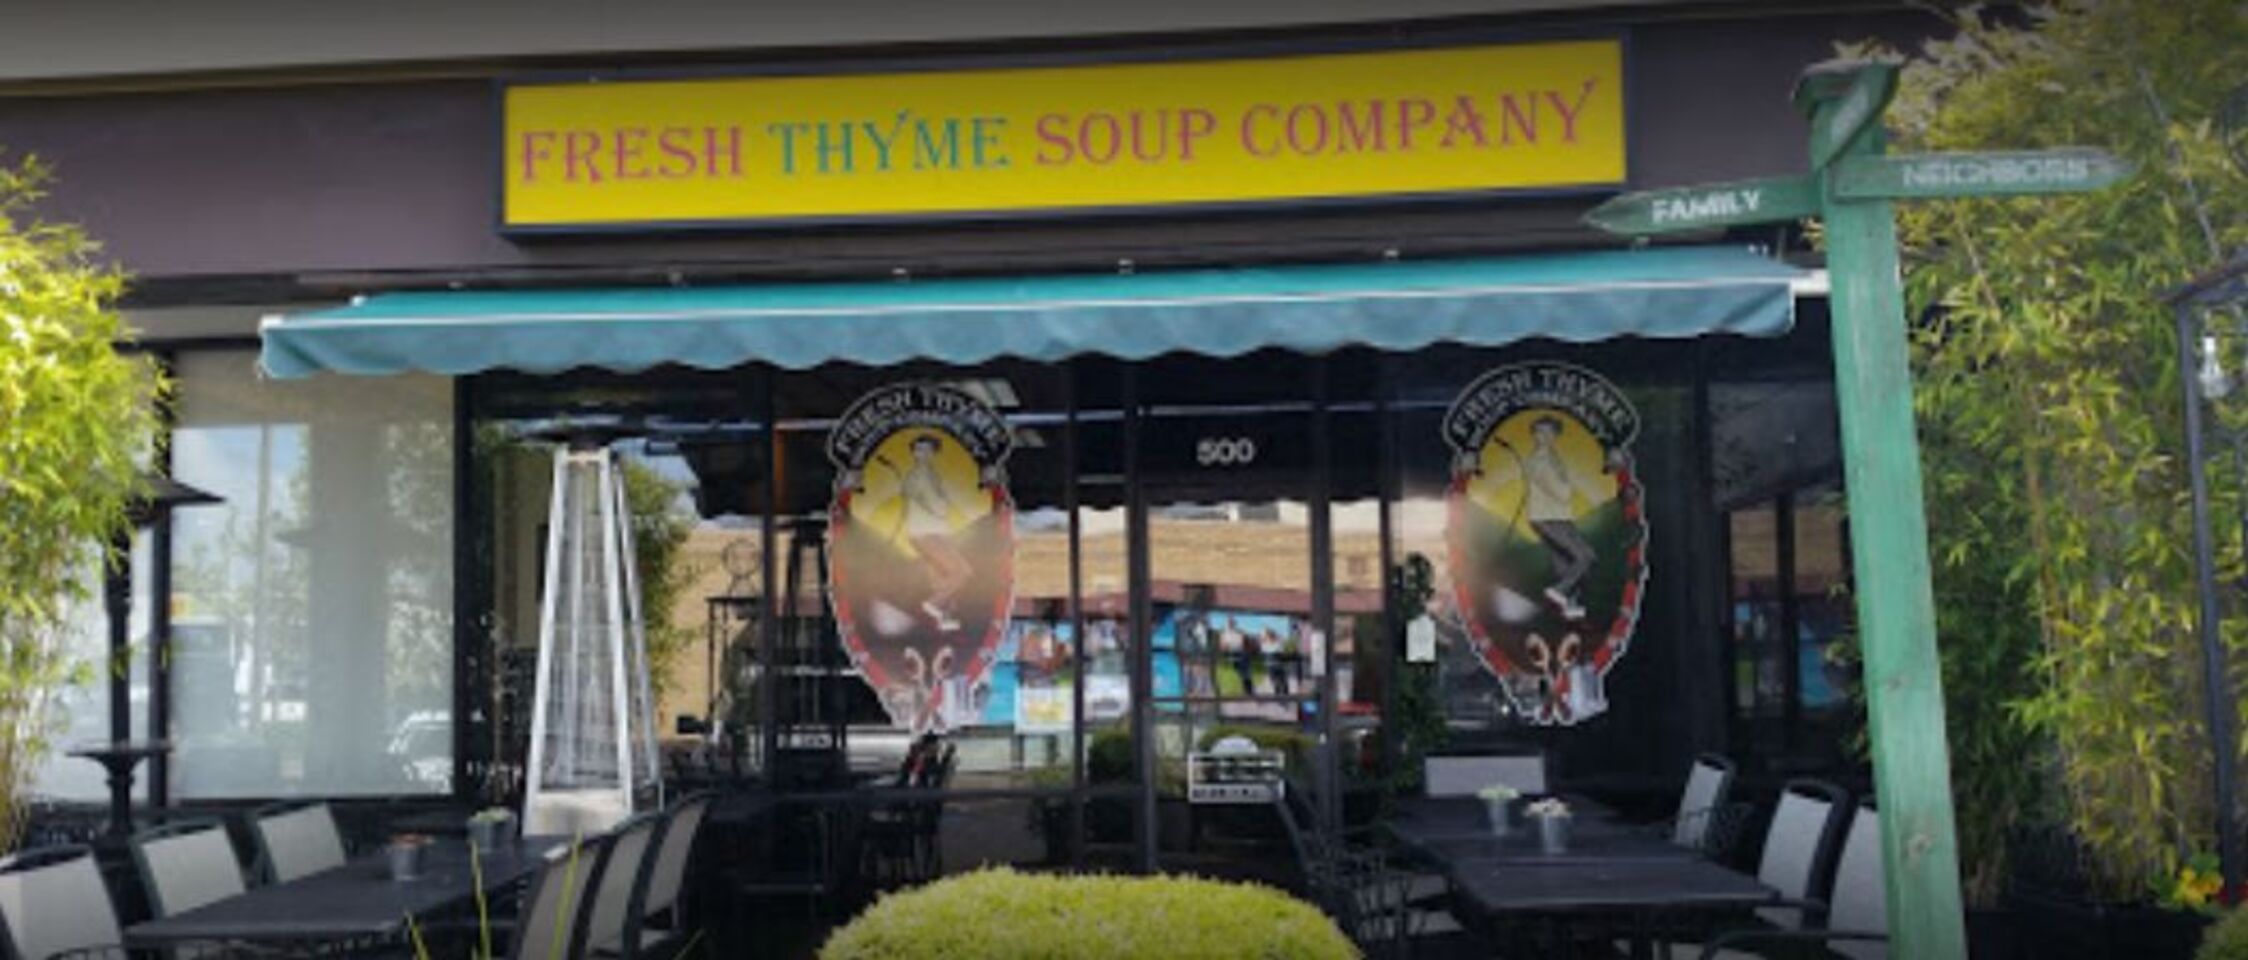 A photo of Fresh Thyme Soup Company